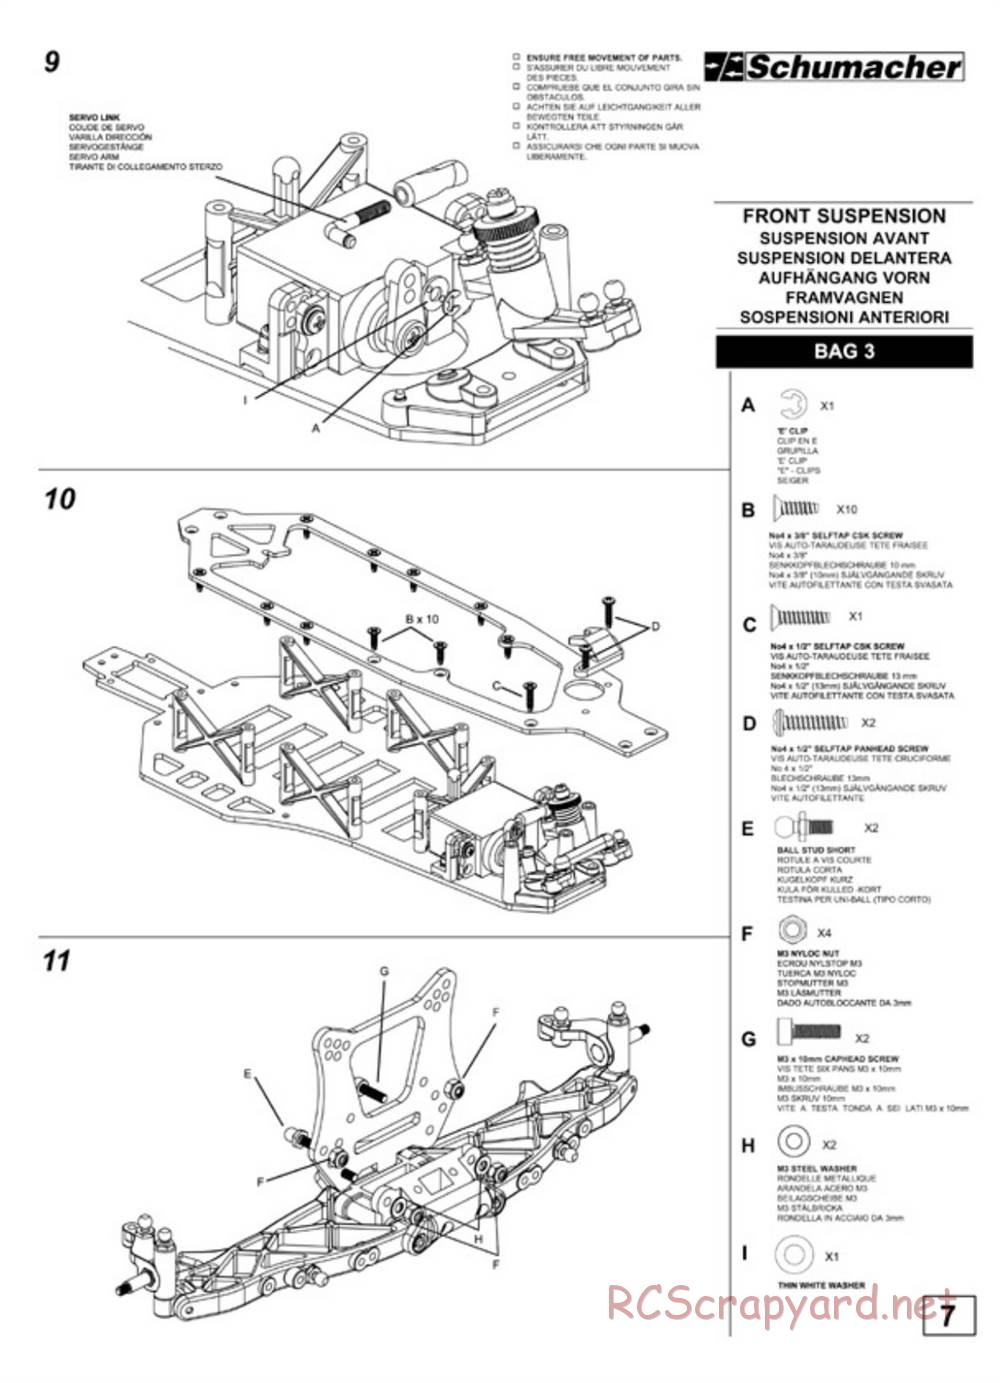 Schumacher - Fireblade Evo - Manual - Page 9